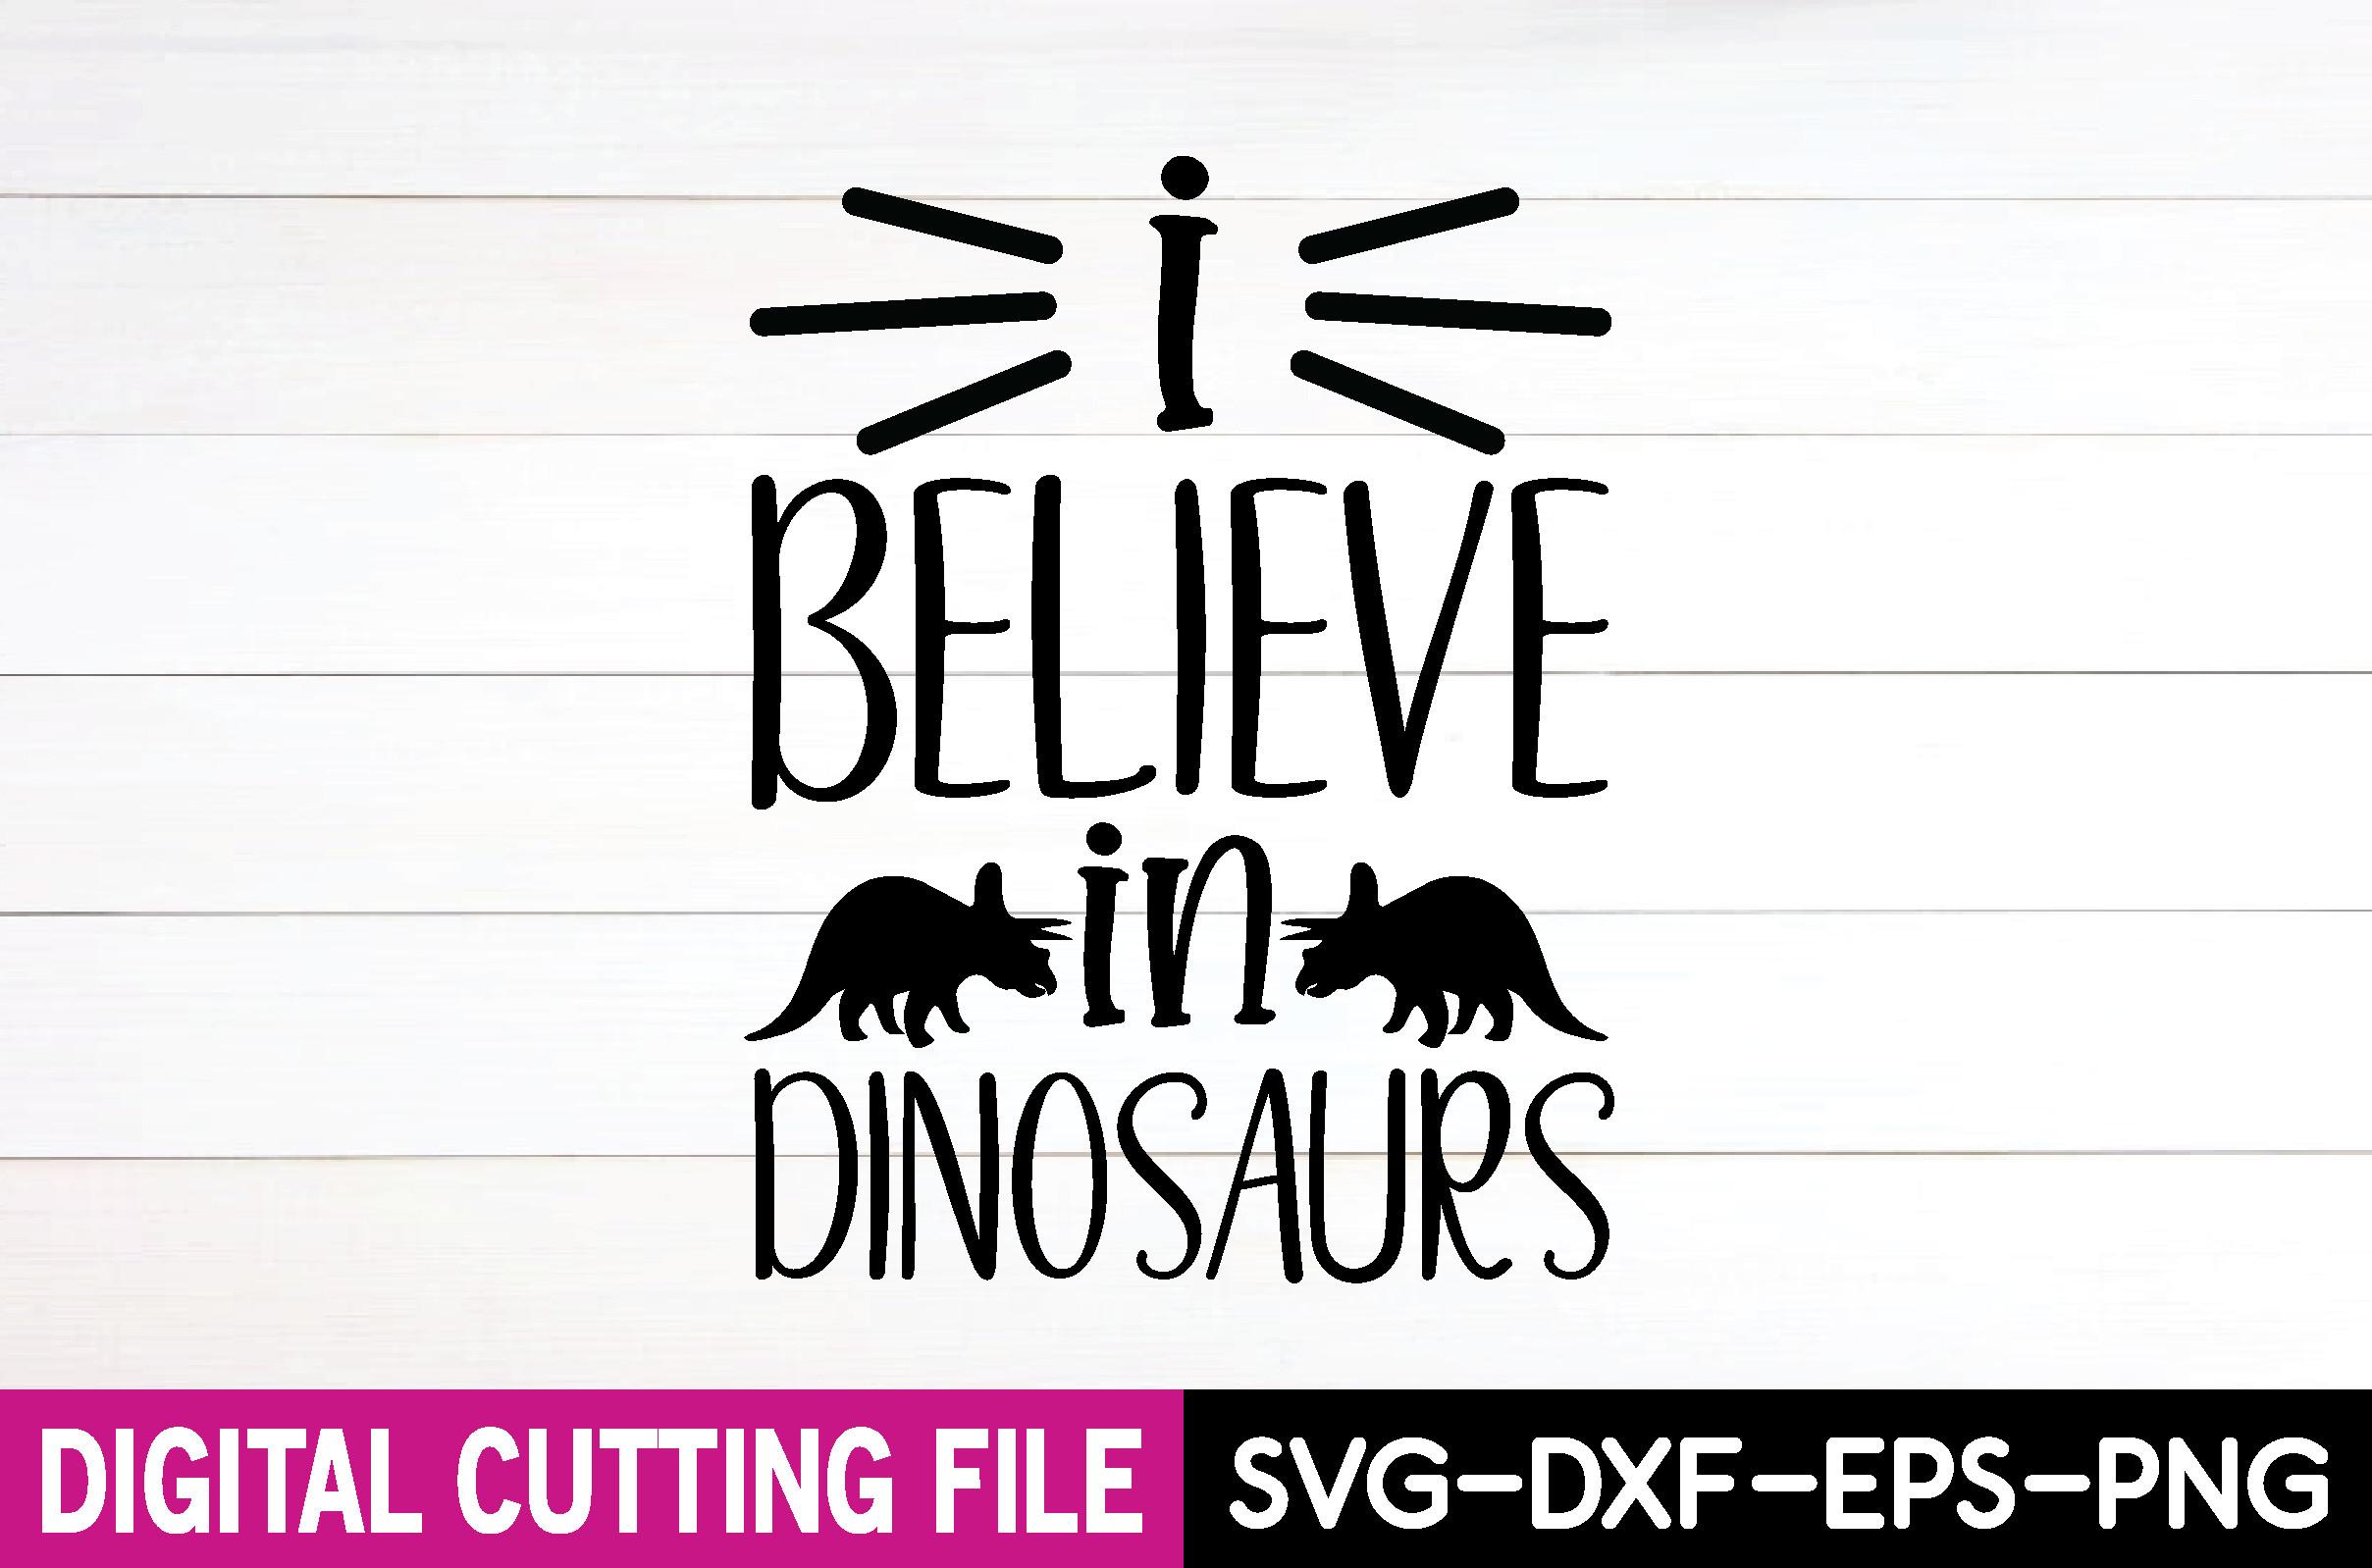 I Believe in Dinosaurs SVG